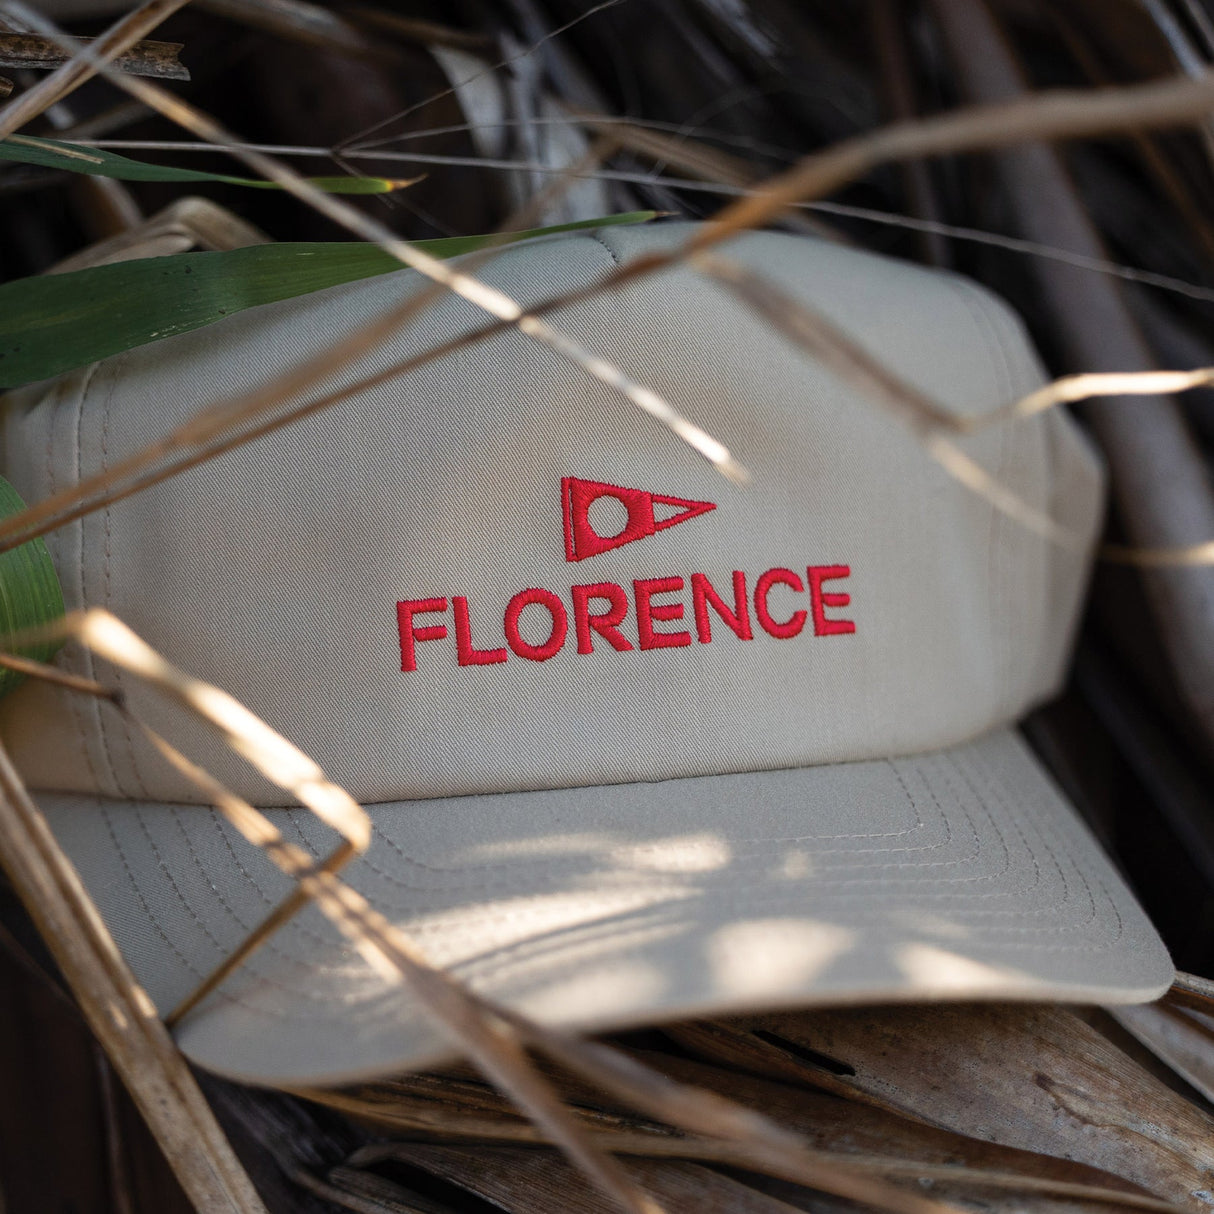 Florence Marine X Logo Twill Hat